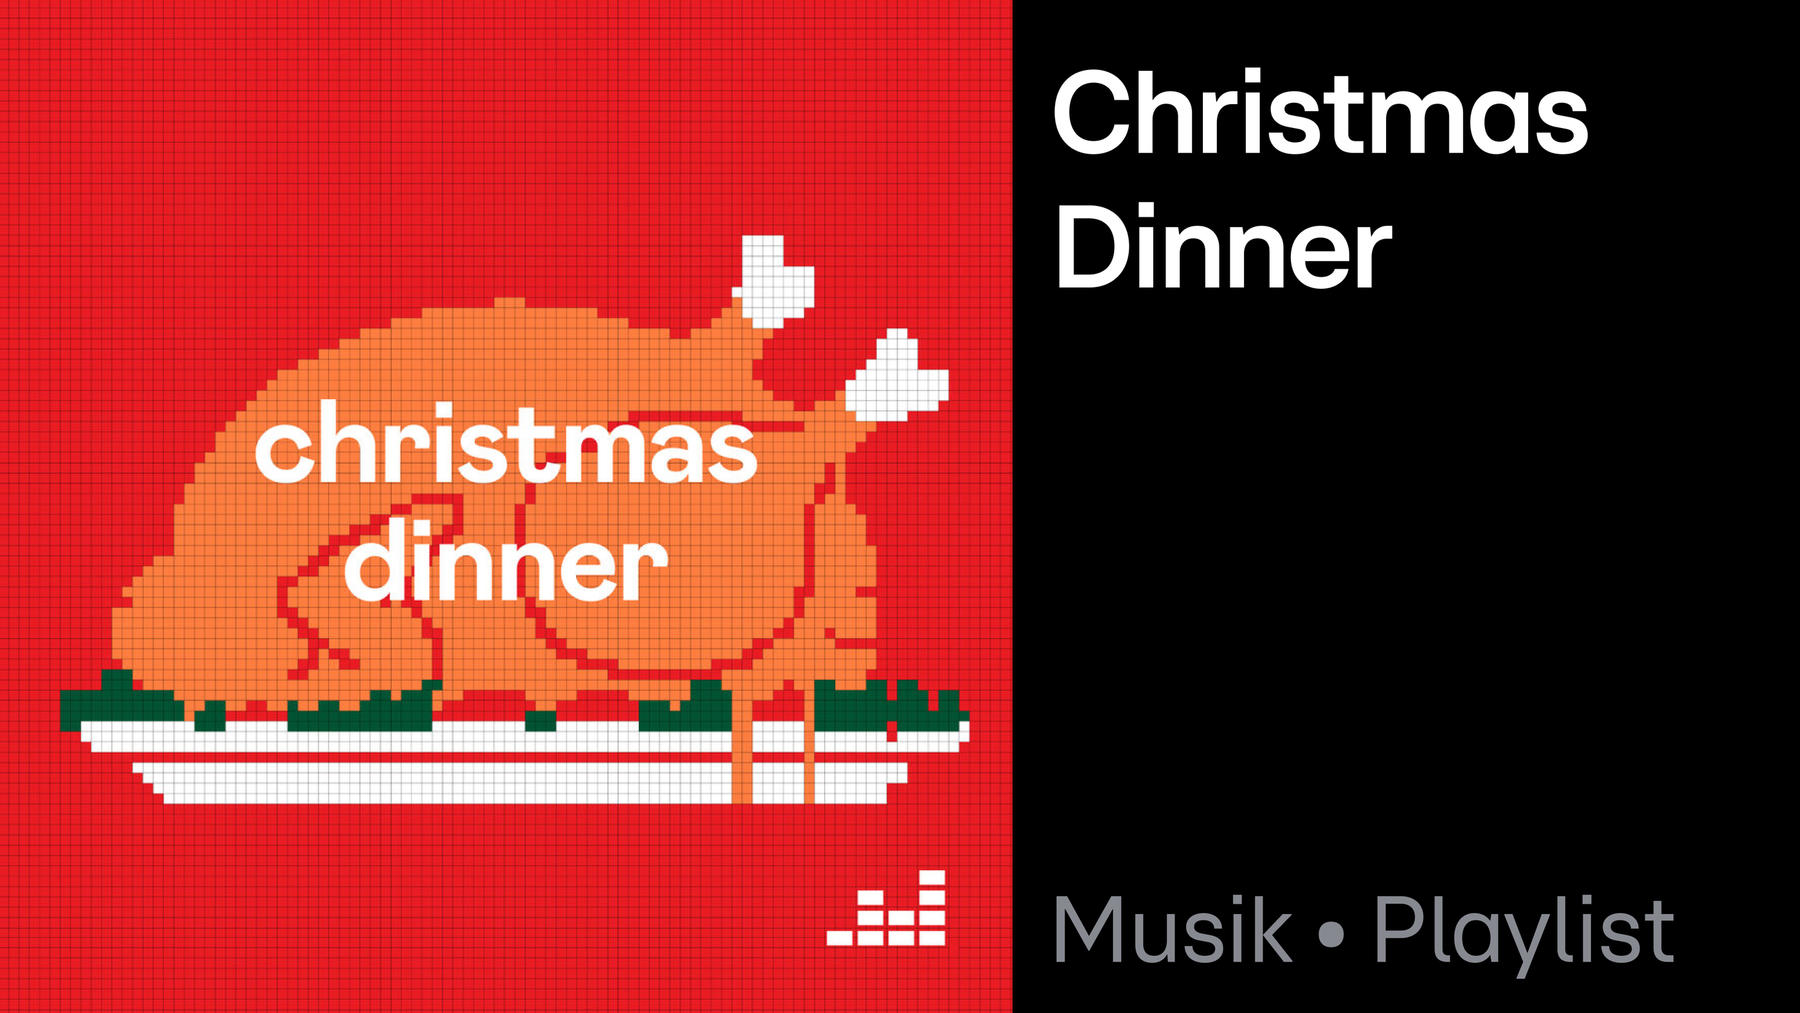 Playlist: Christmas Dinner